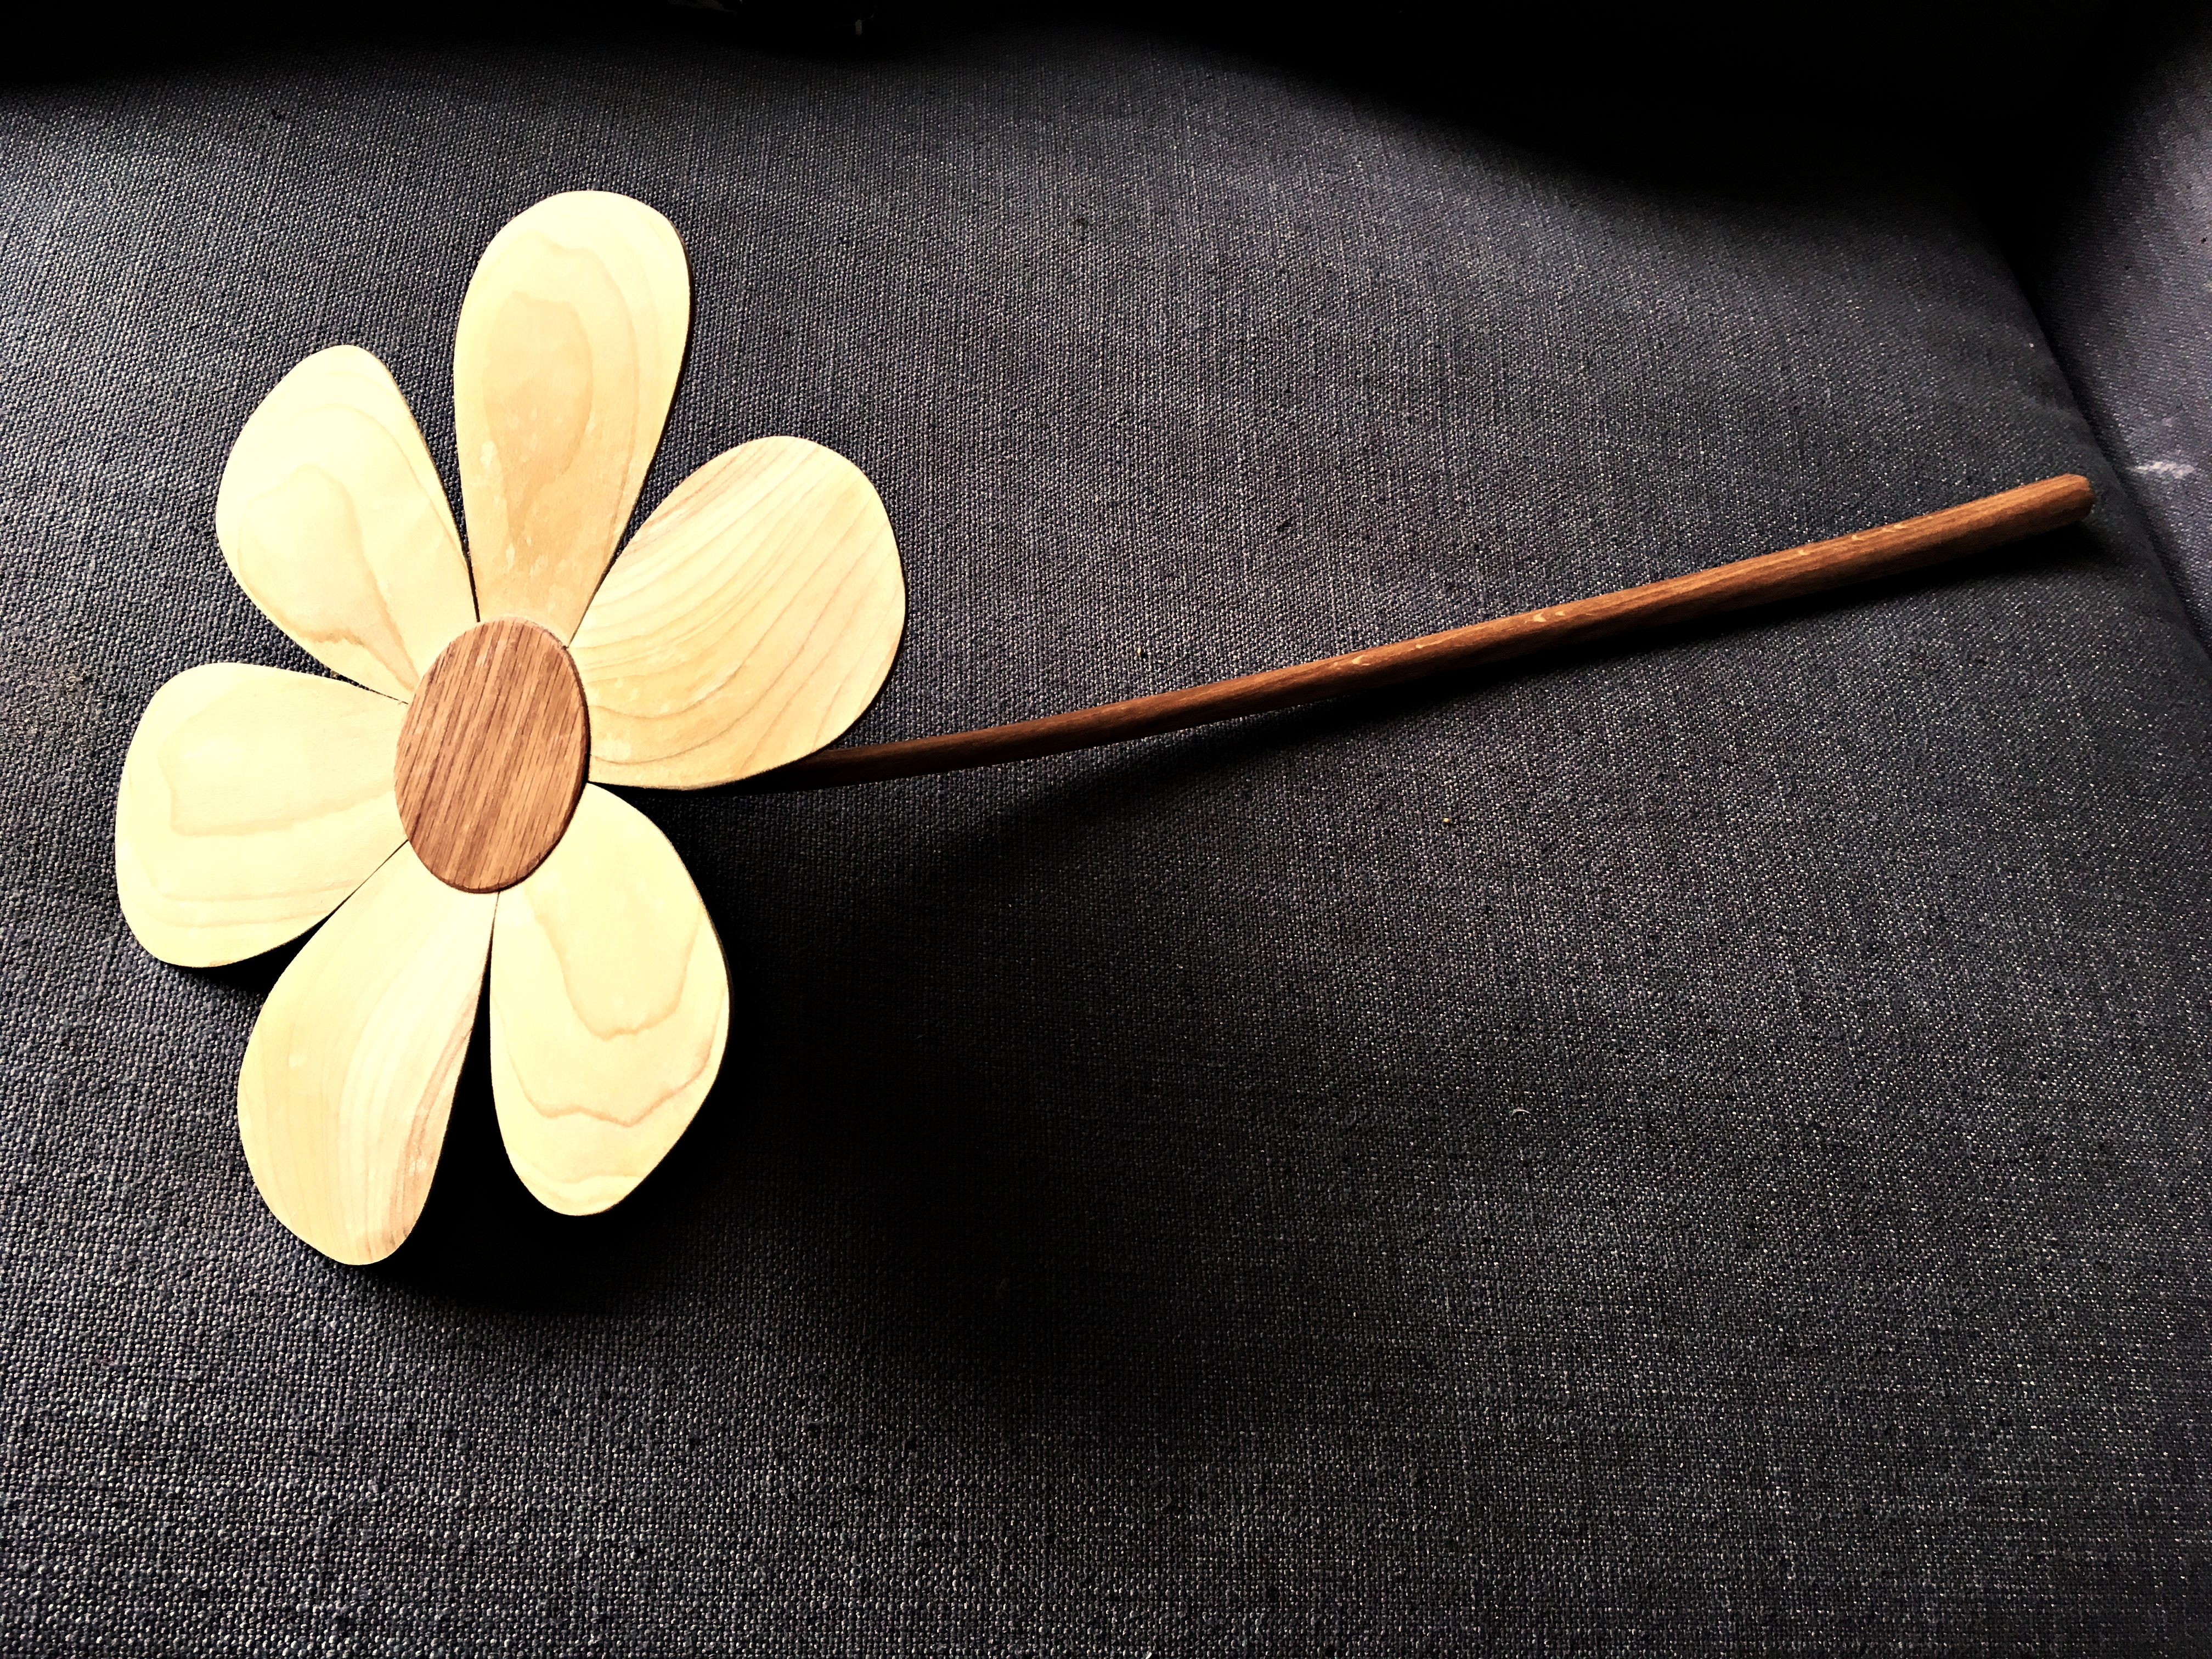 käsitöö, eesti traditisooniline käsitöö, puitdisain, lill, karikakar, puidust lill